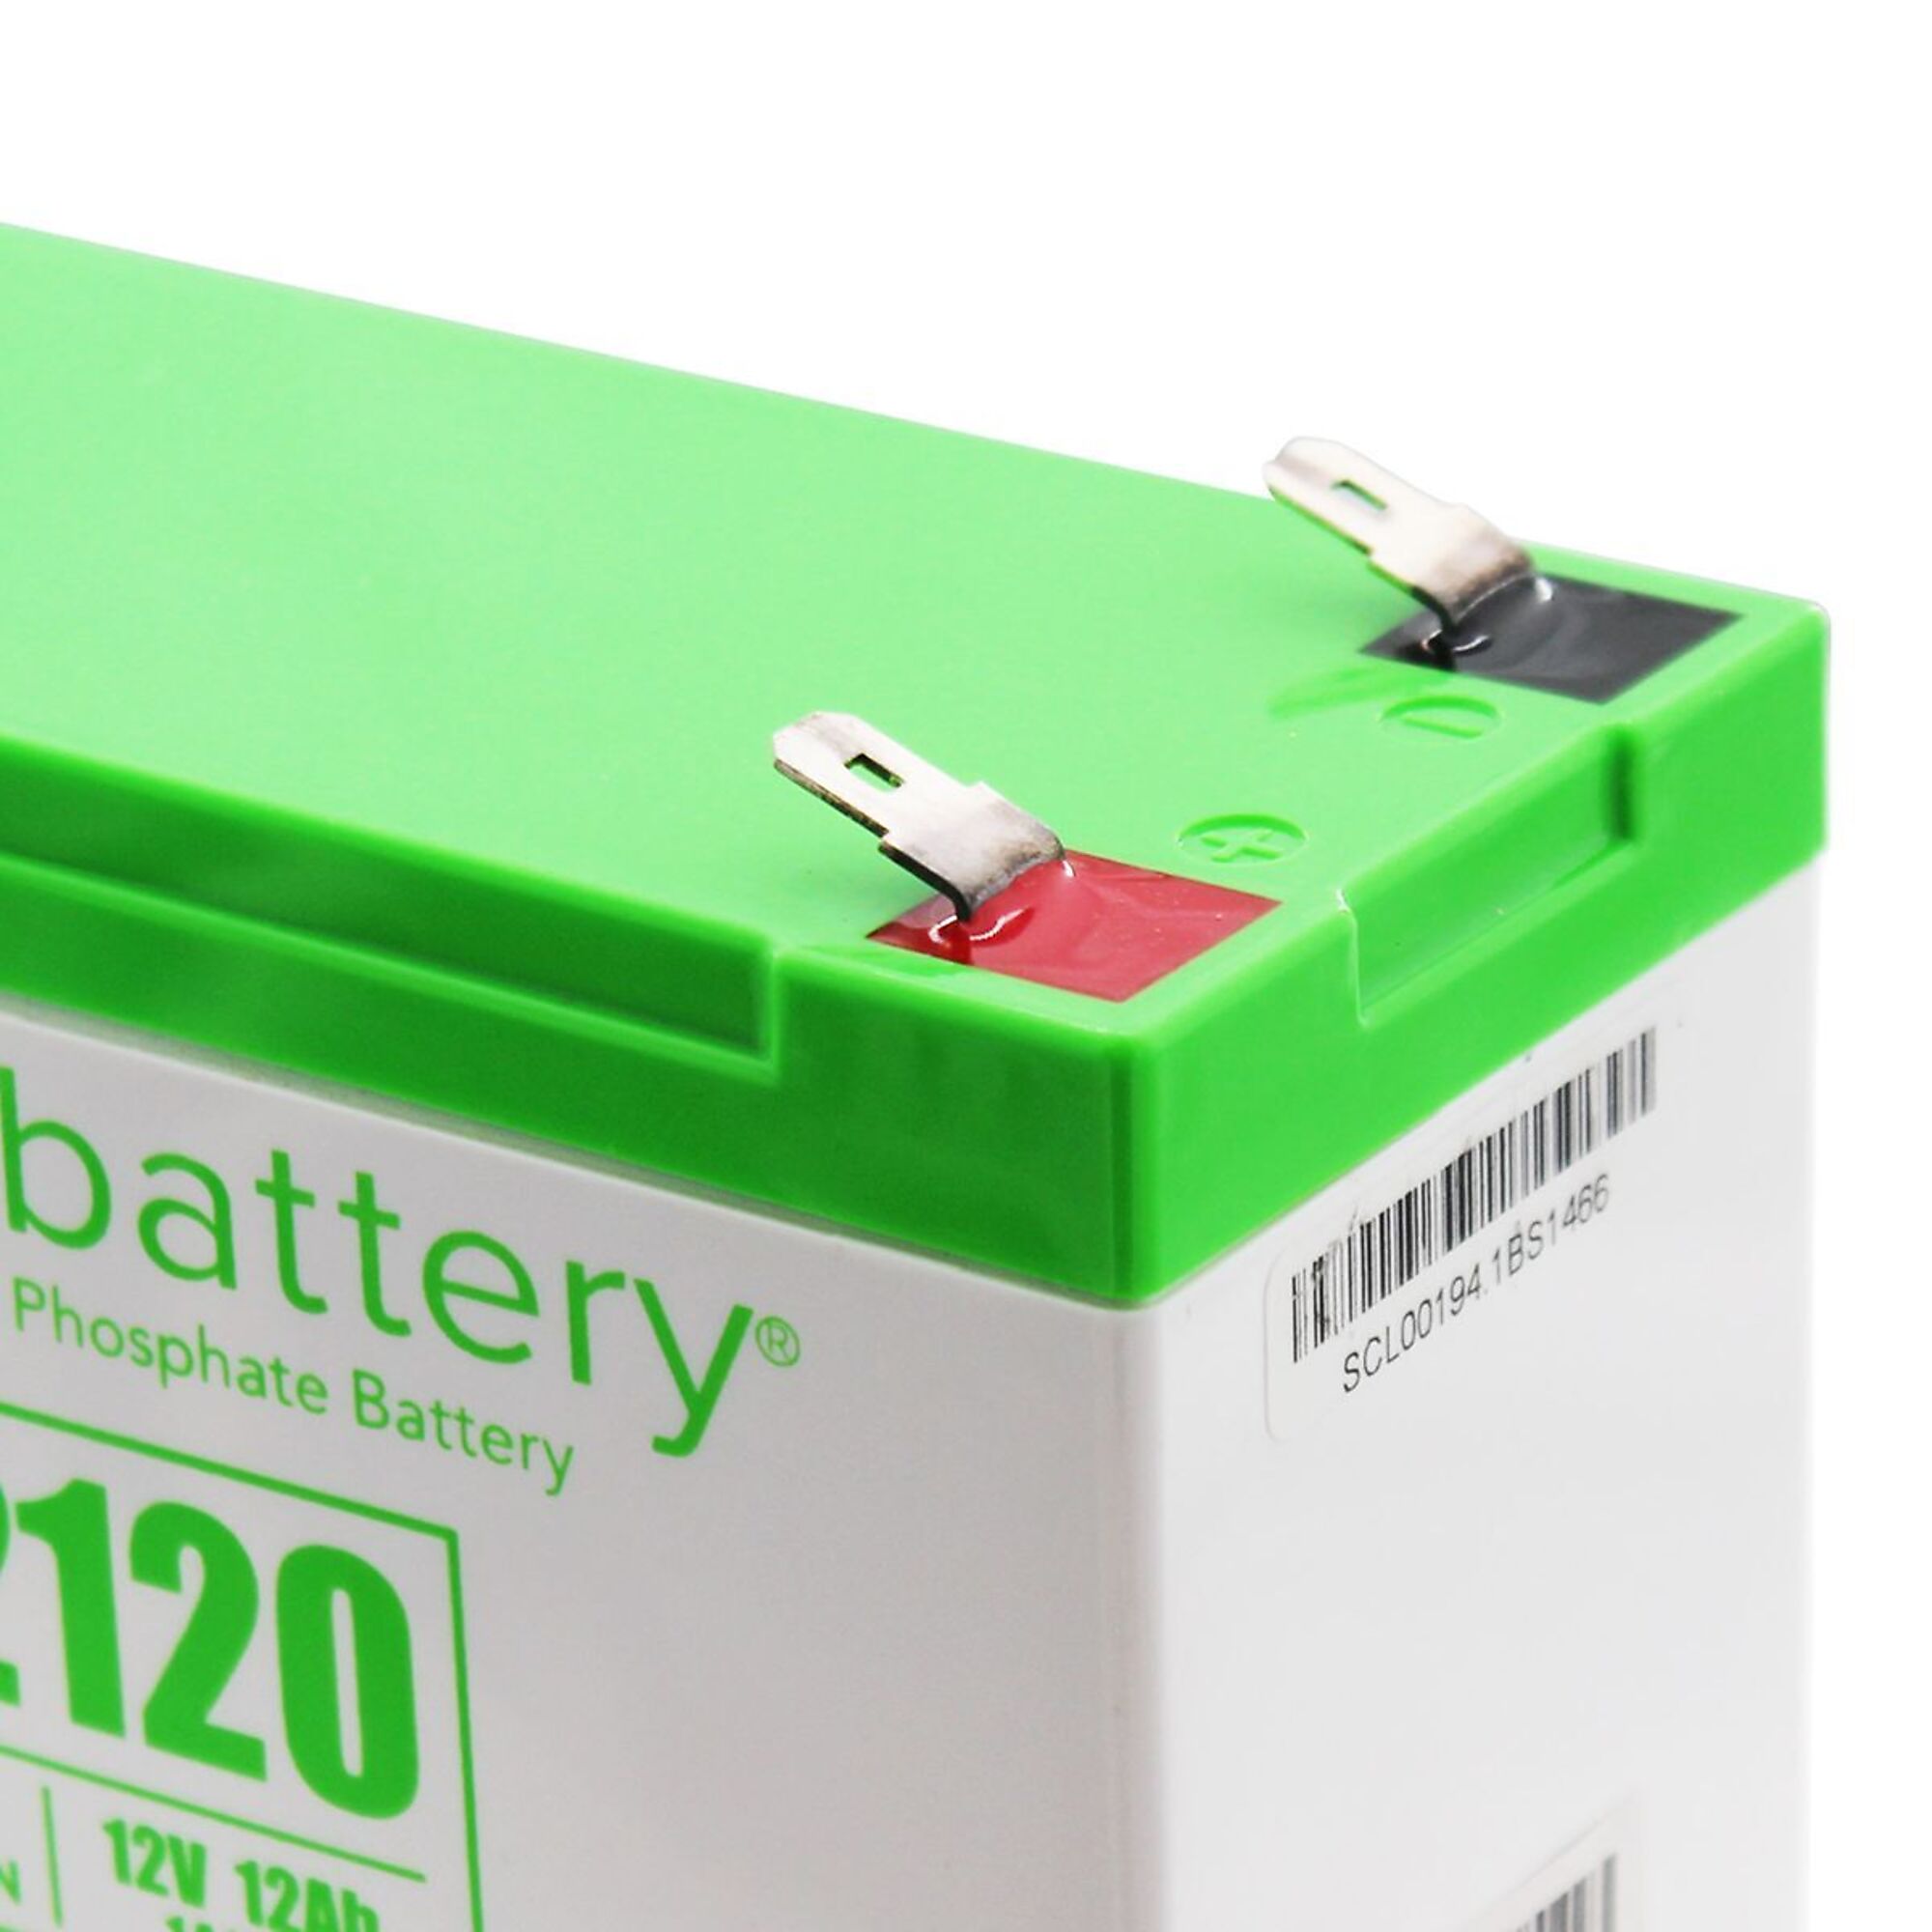 12V 12AH Lithium PVC Wrap Battery